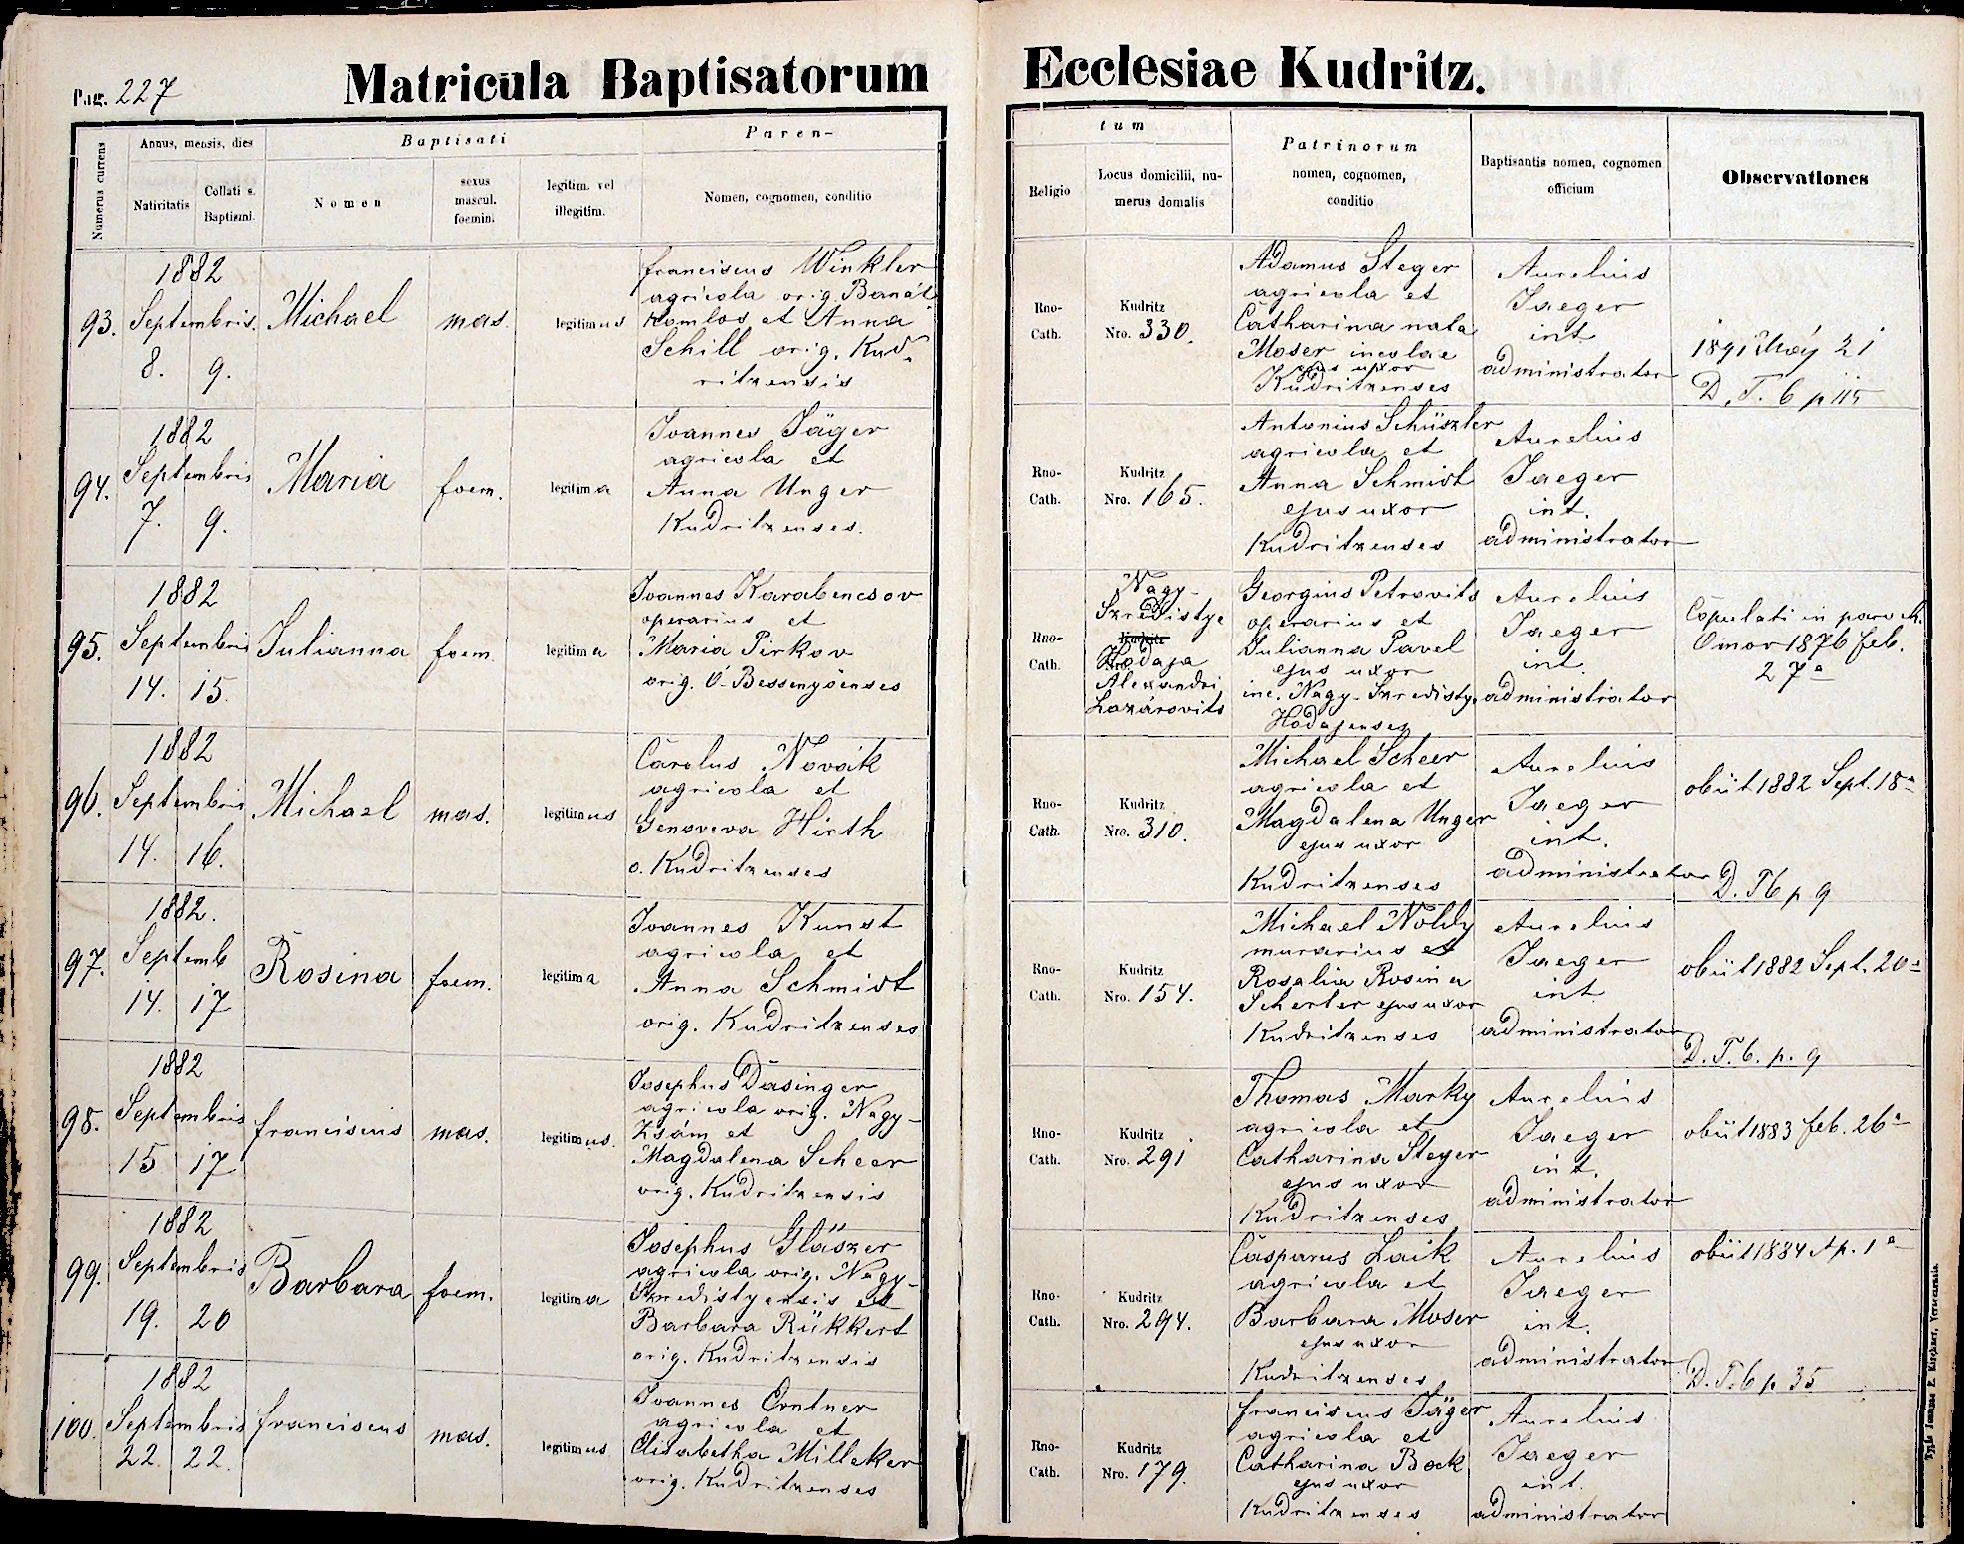 images/church_records/BIRTHS/1880-1883B/1882/227